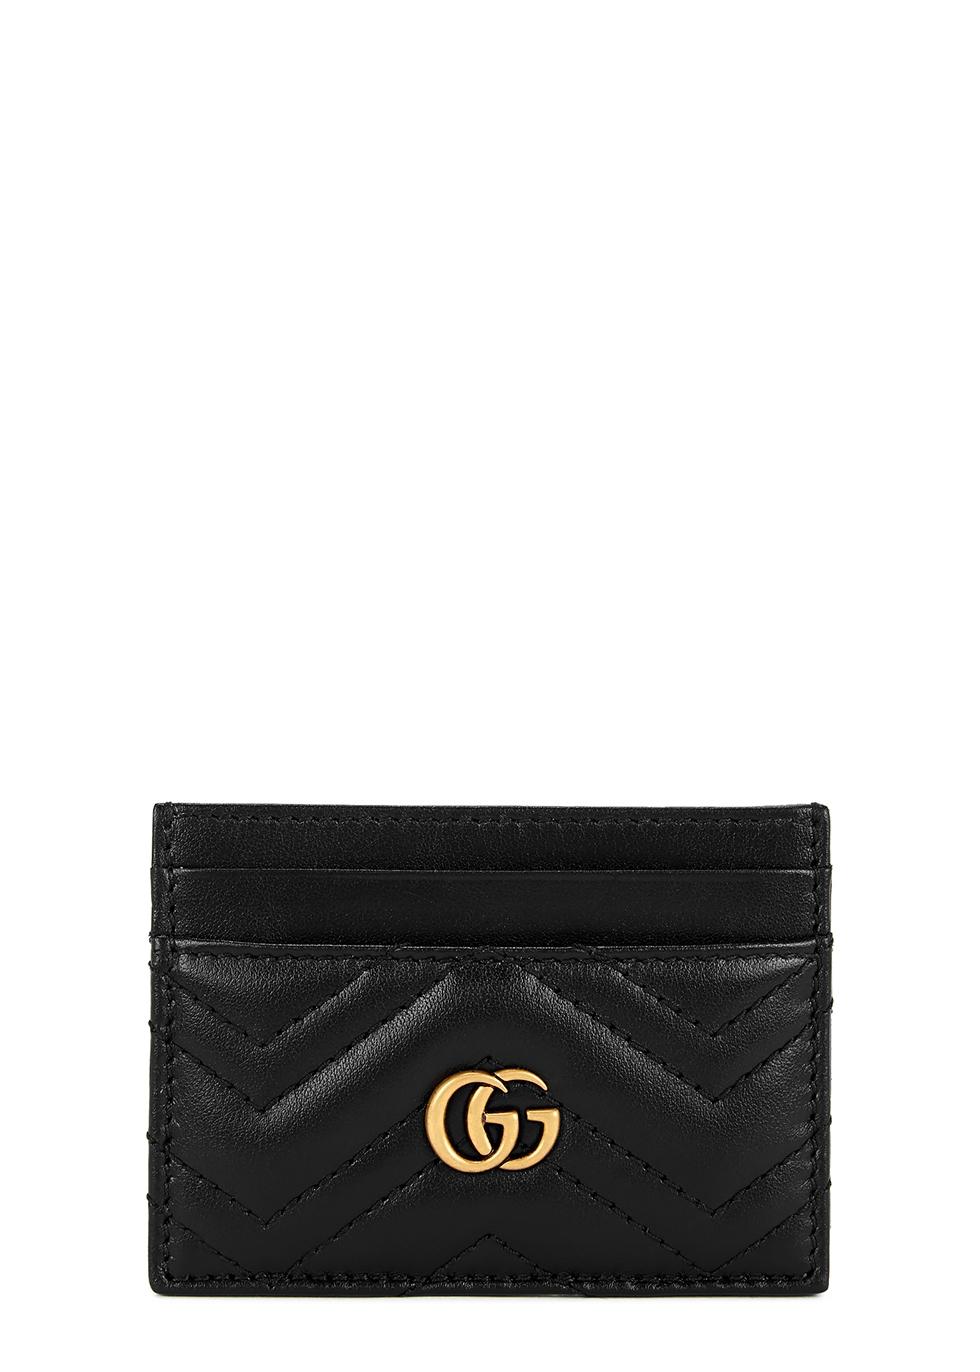 gucci wallet holder